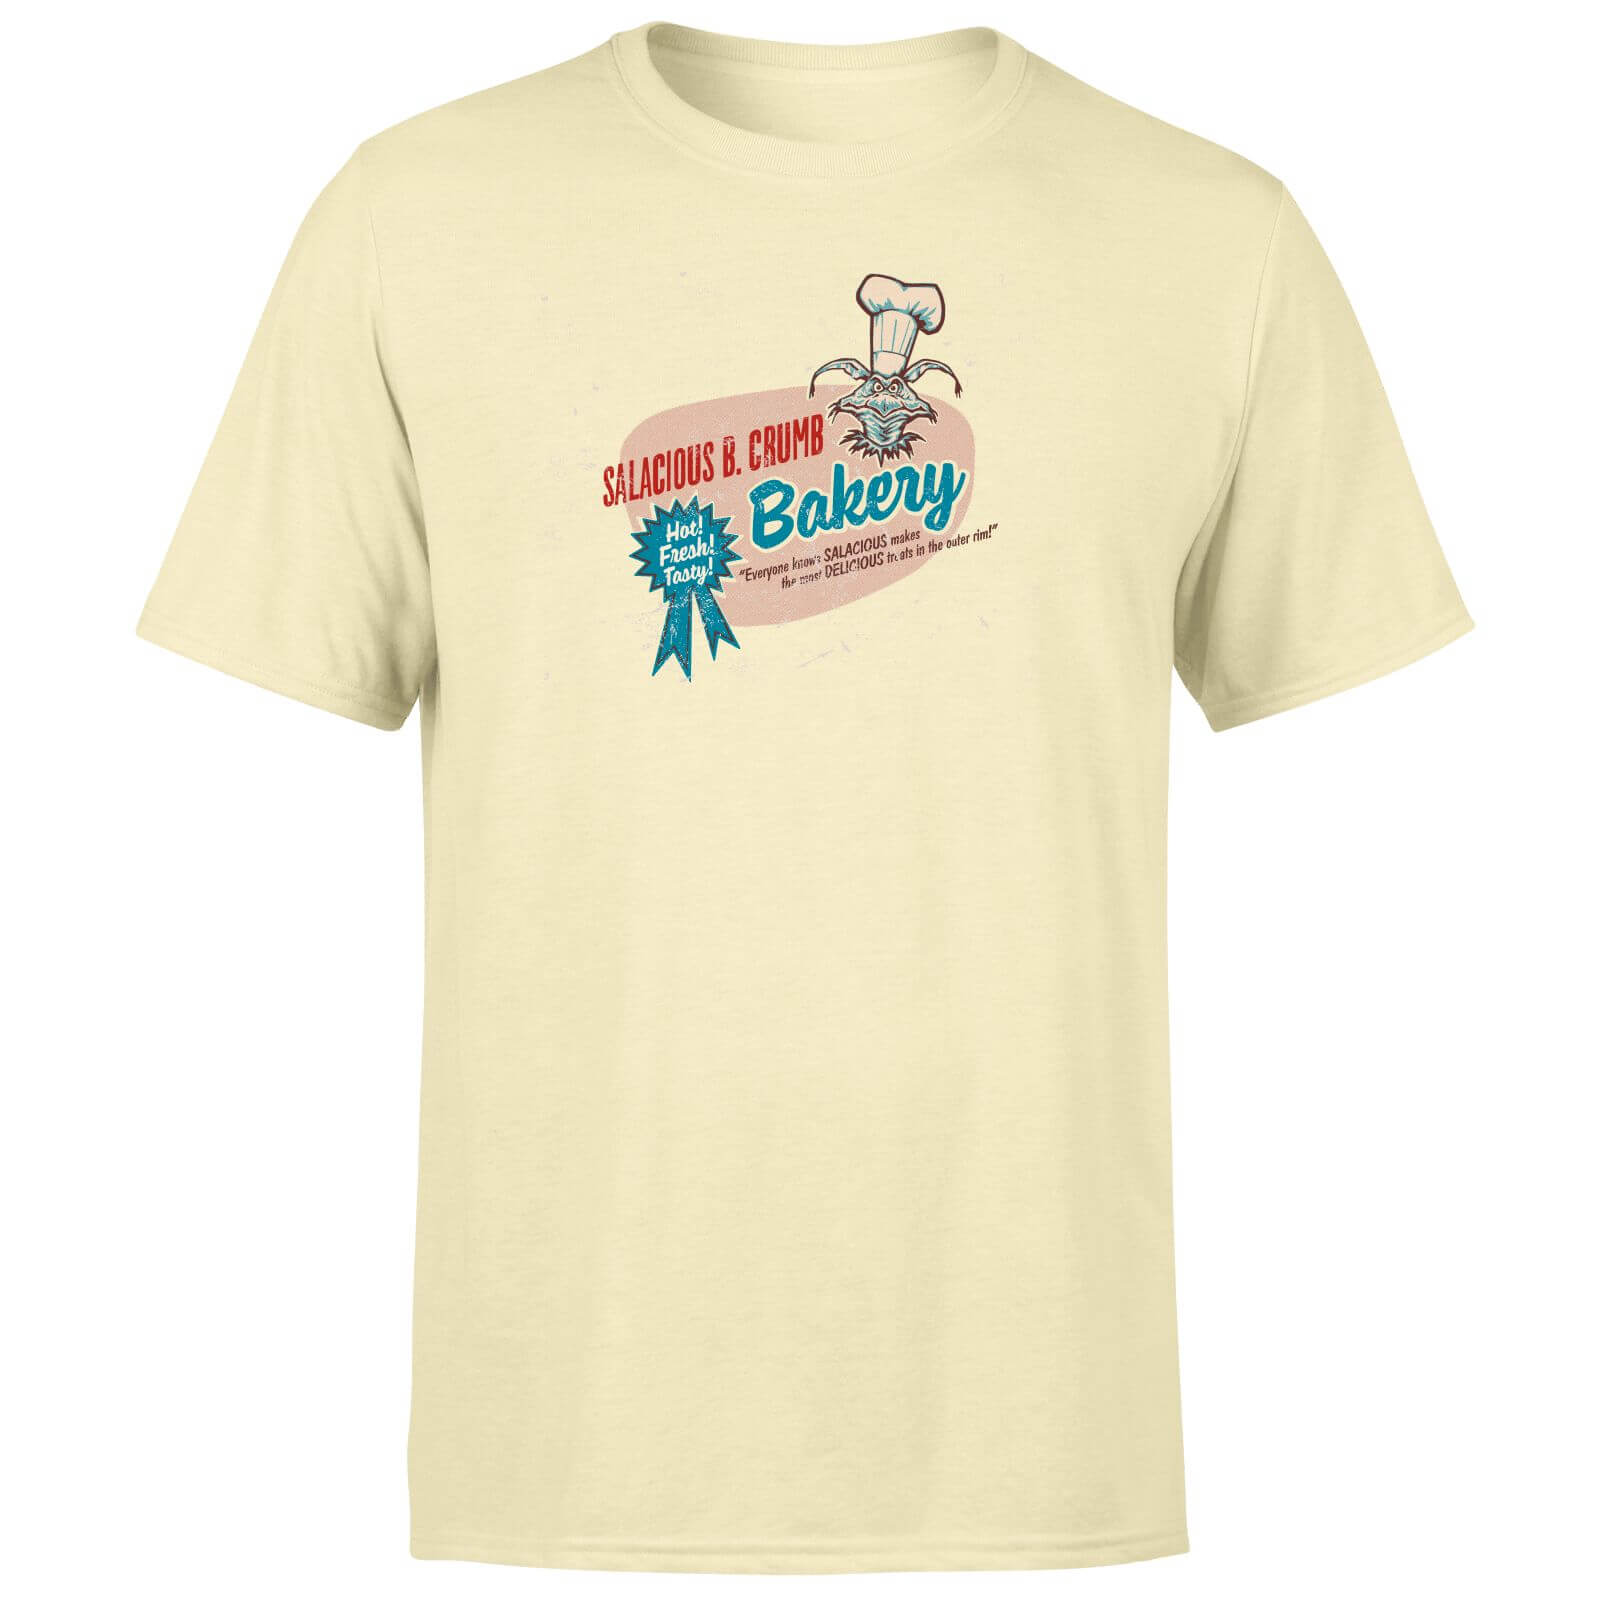 Star Wars Slacious B. Crum Bakery Unisex T-Shirt - Cream - S - Cream